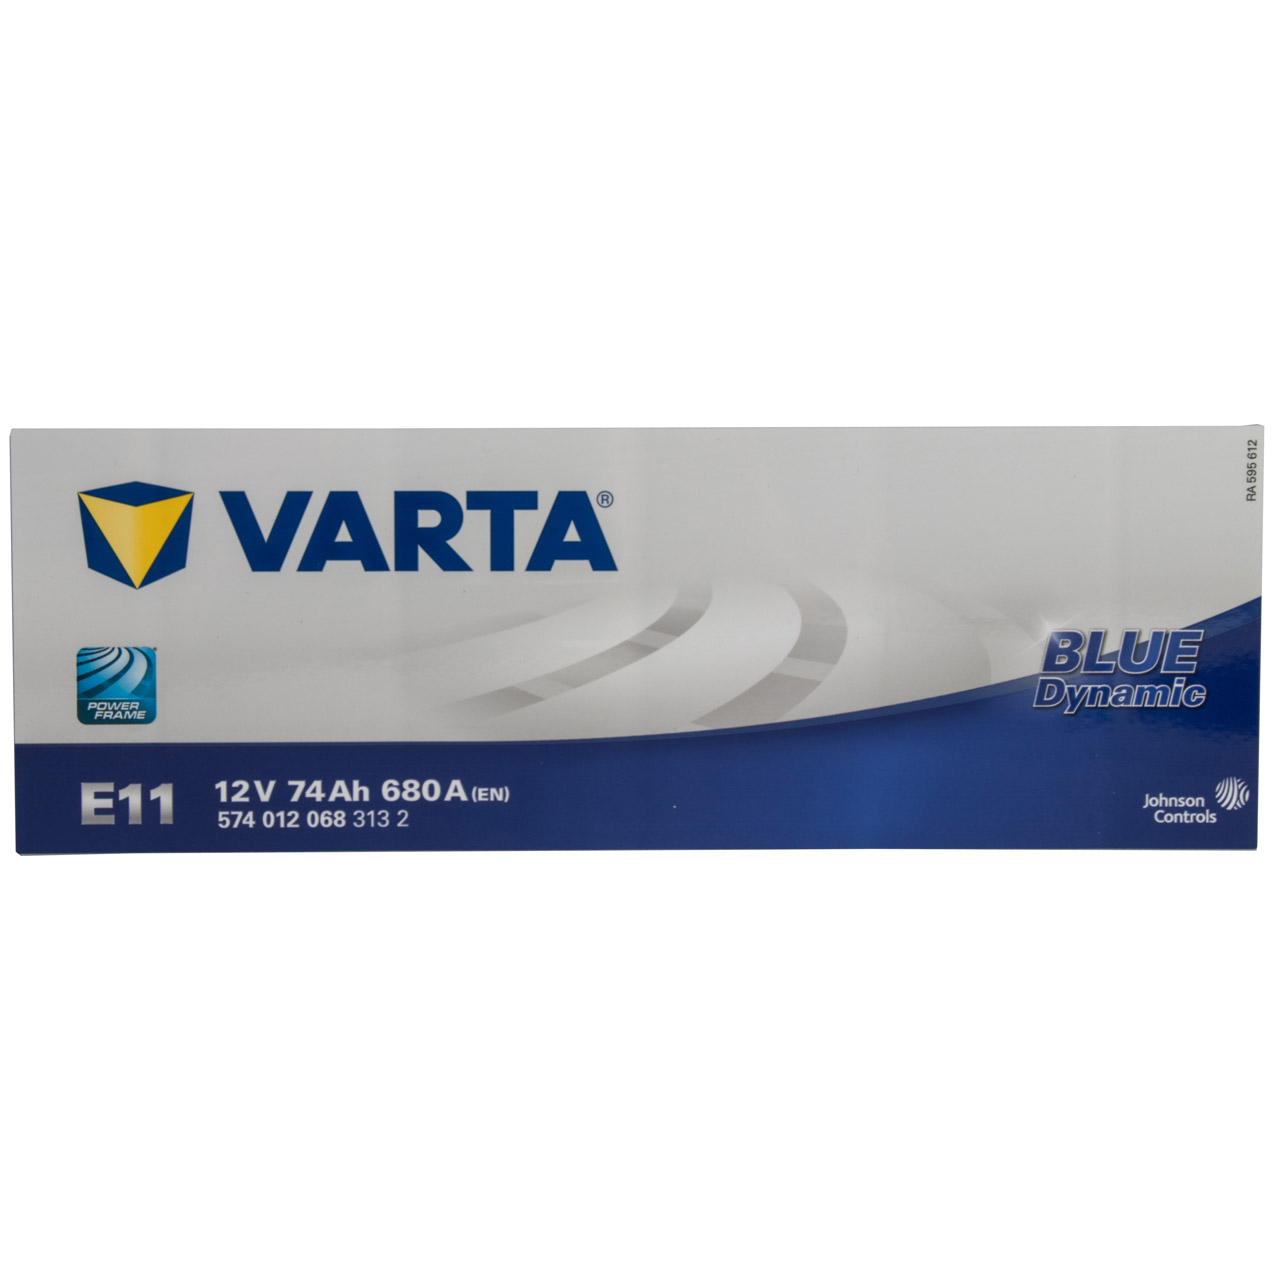 Varta Blue Dynamic E11 12V 74Ah 680A/EN Autobatterie -batcar.de